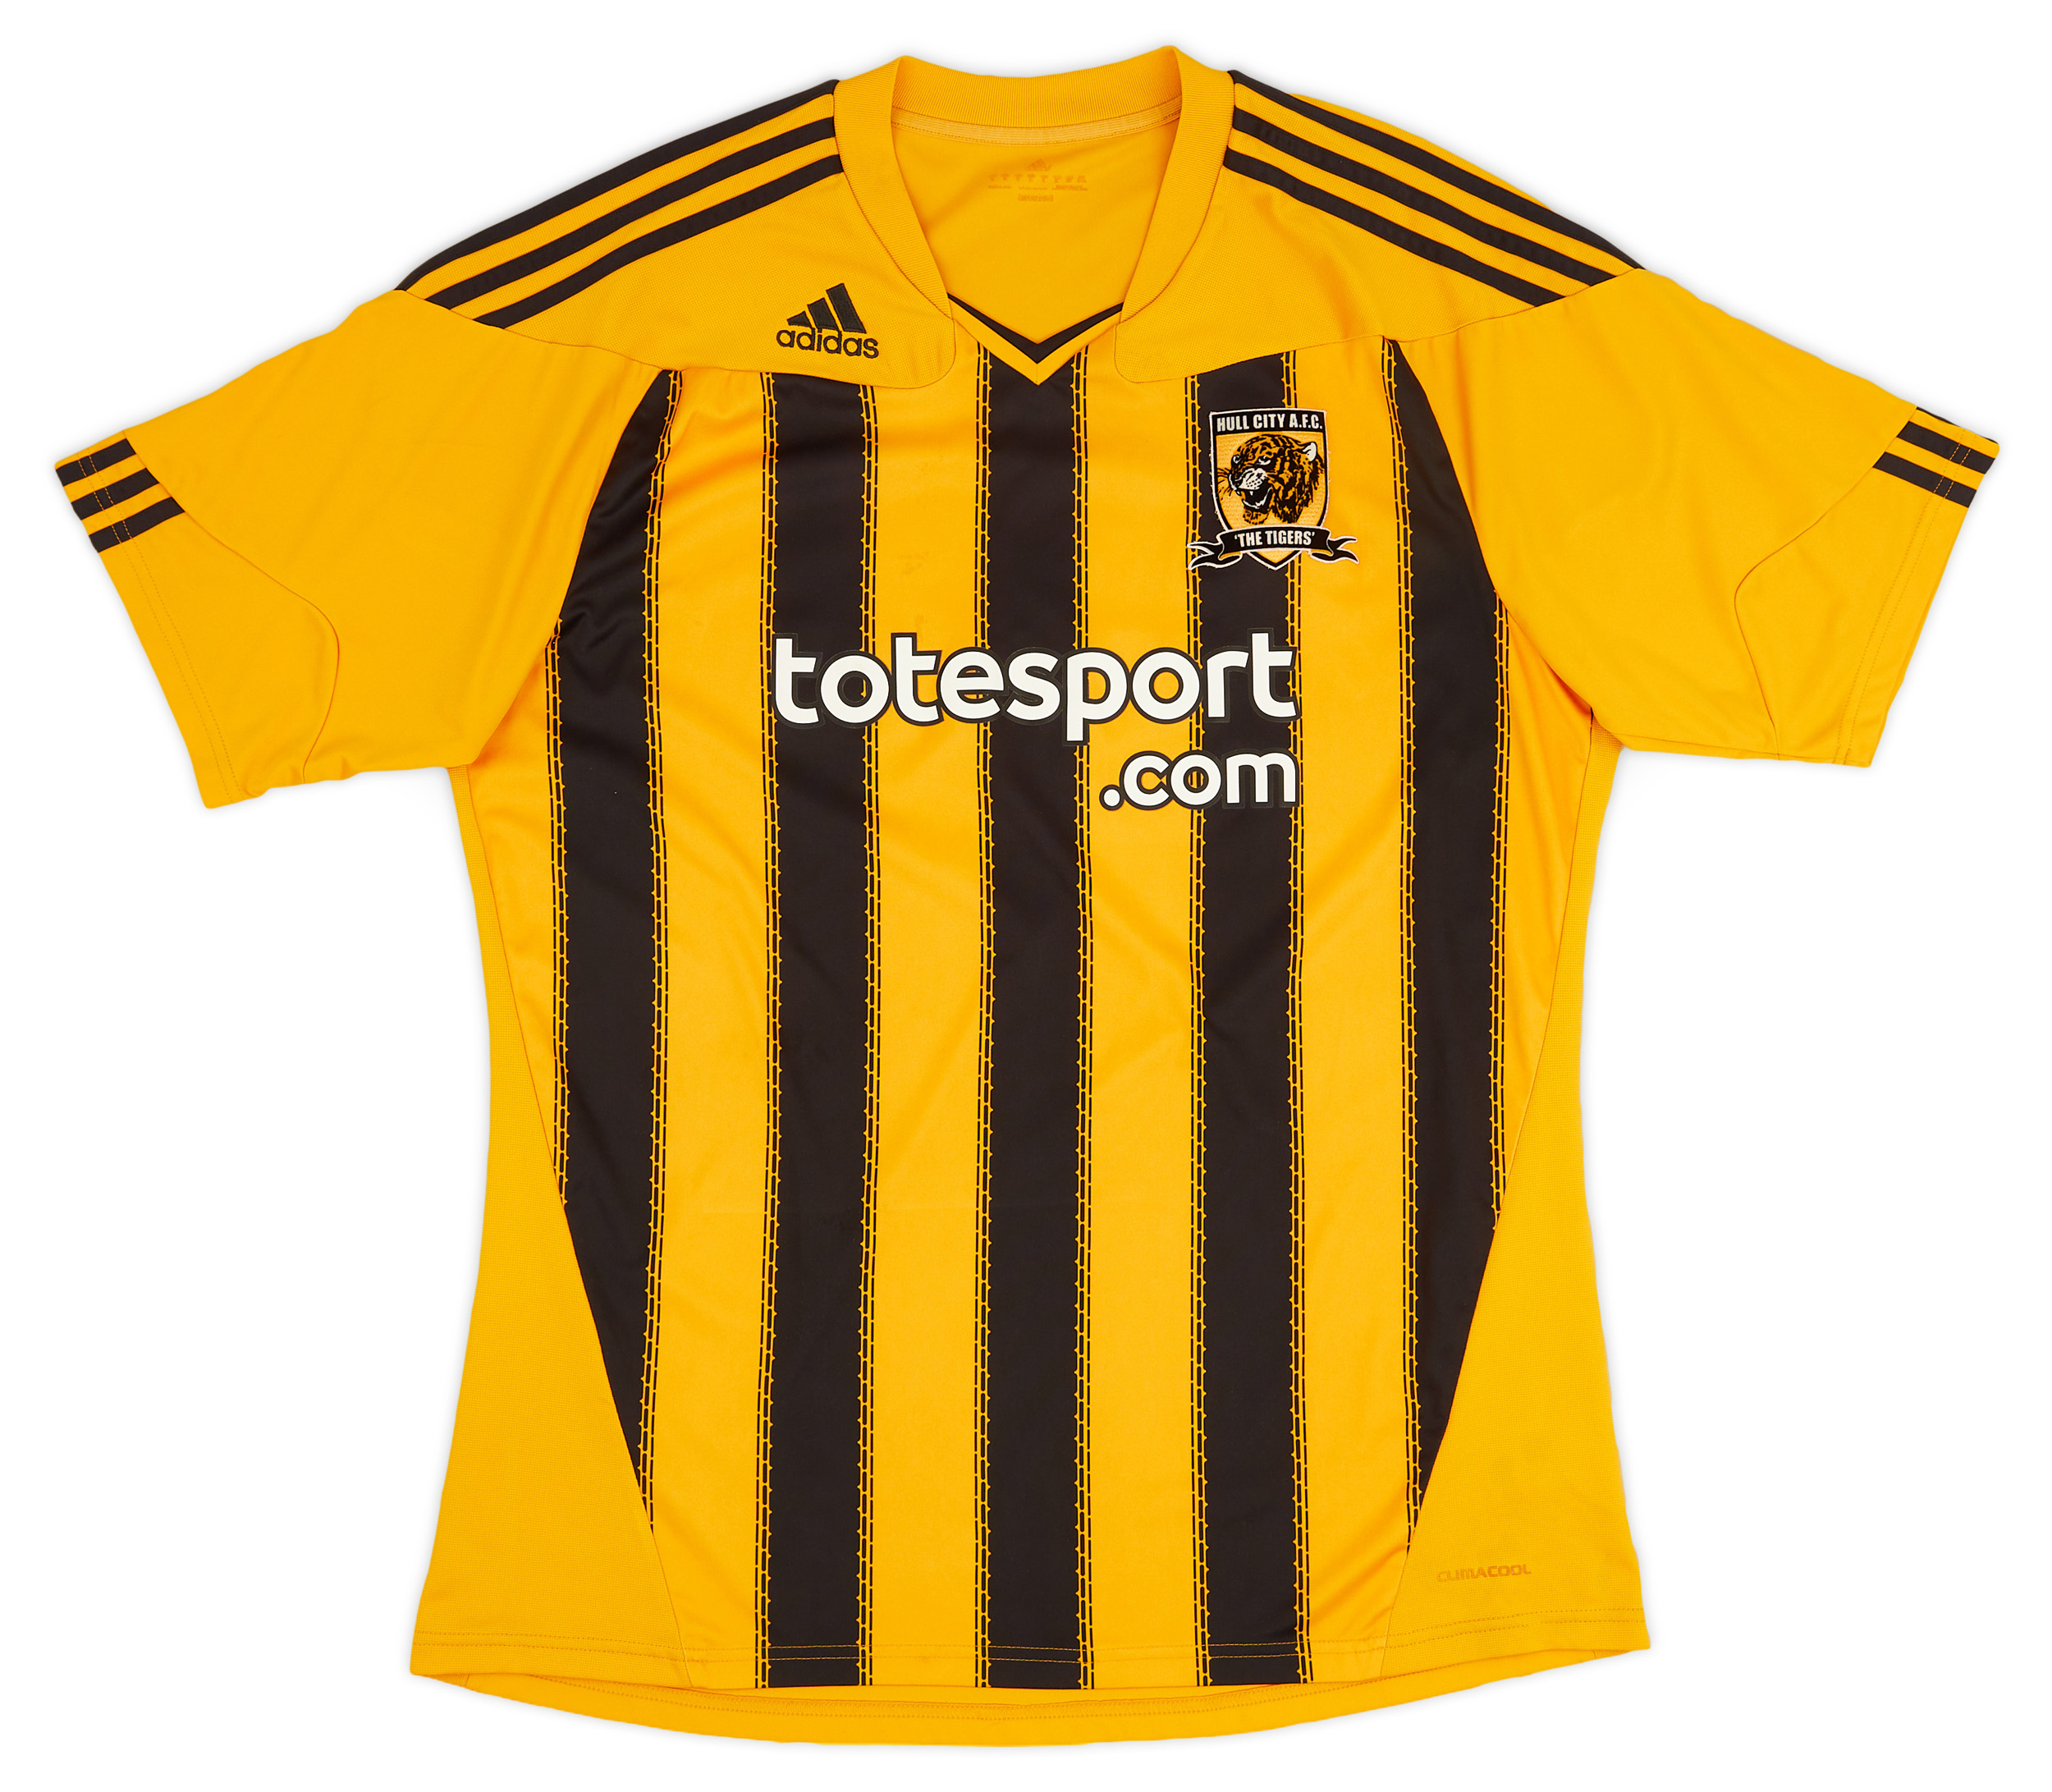 2010-11 Hull City Home Shirt - 6/10 - ()